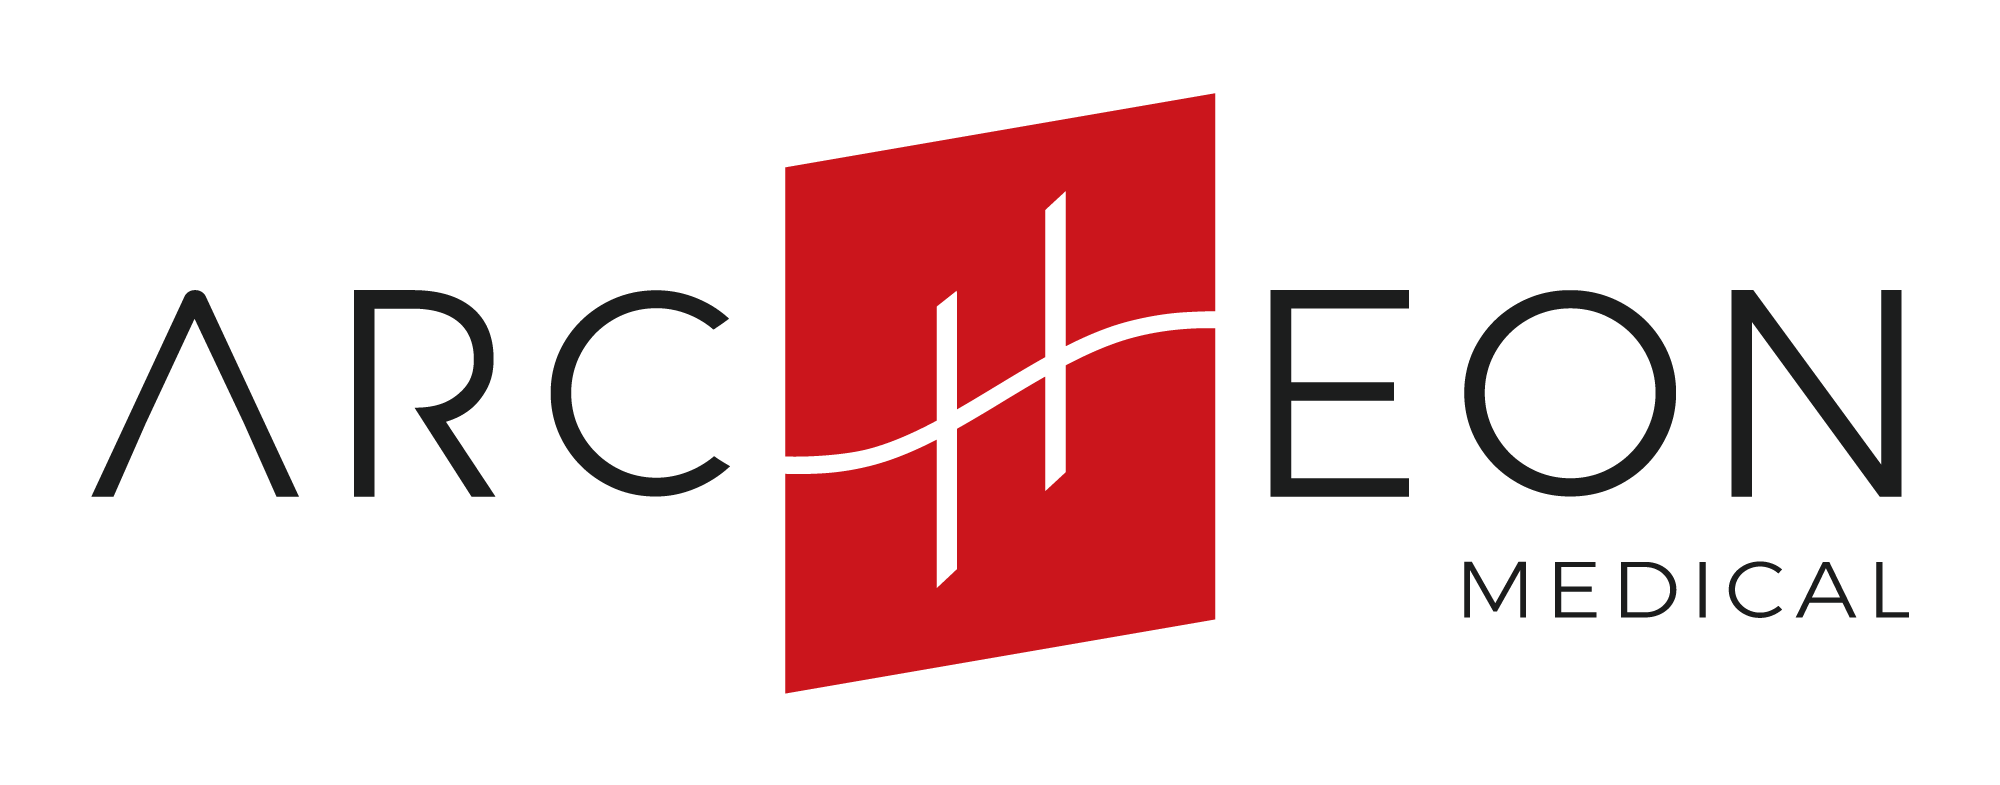 sponsor logo - Archeon Medical